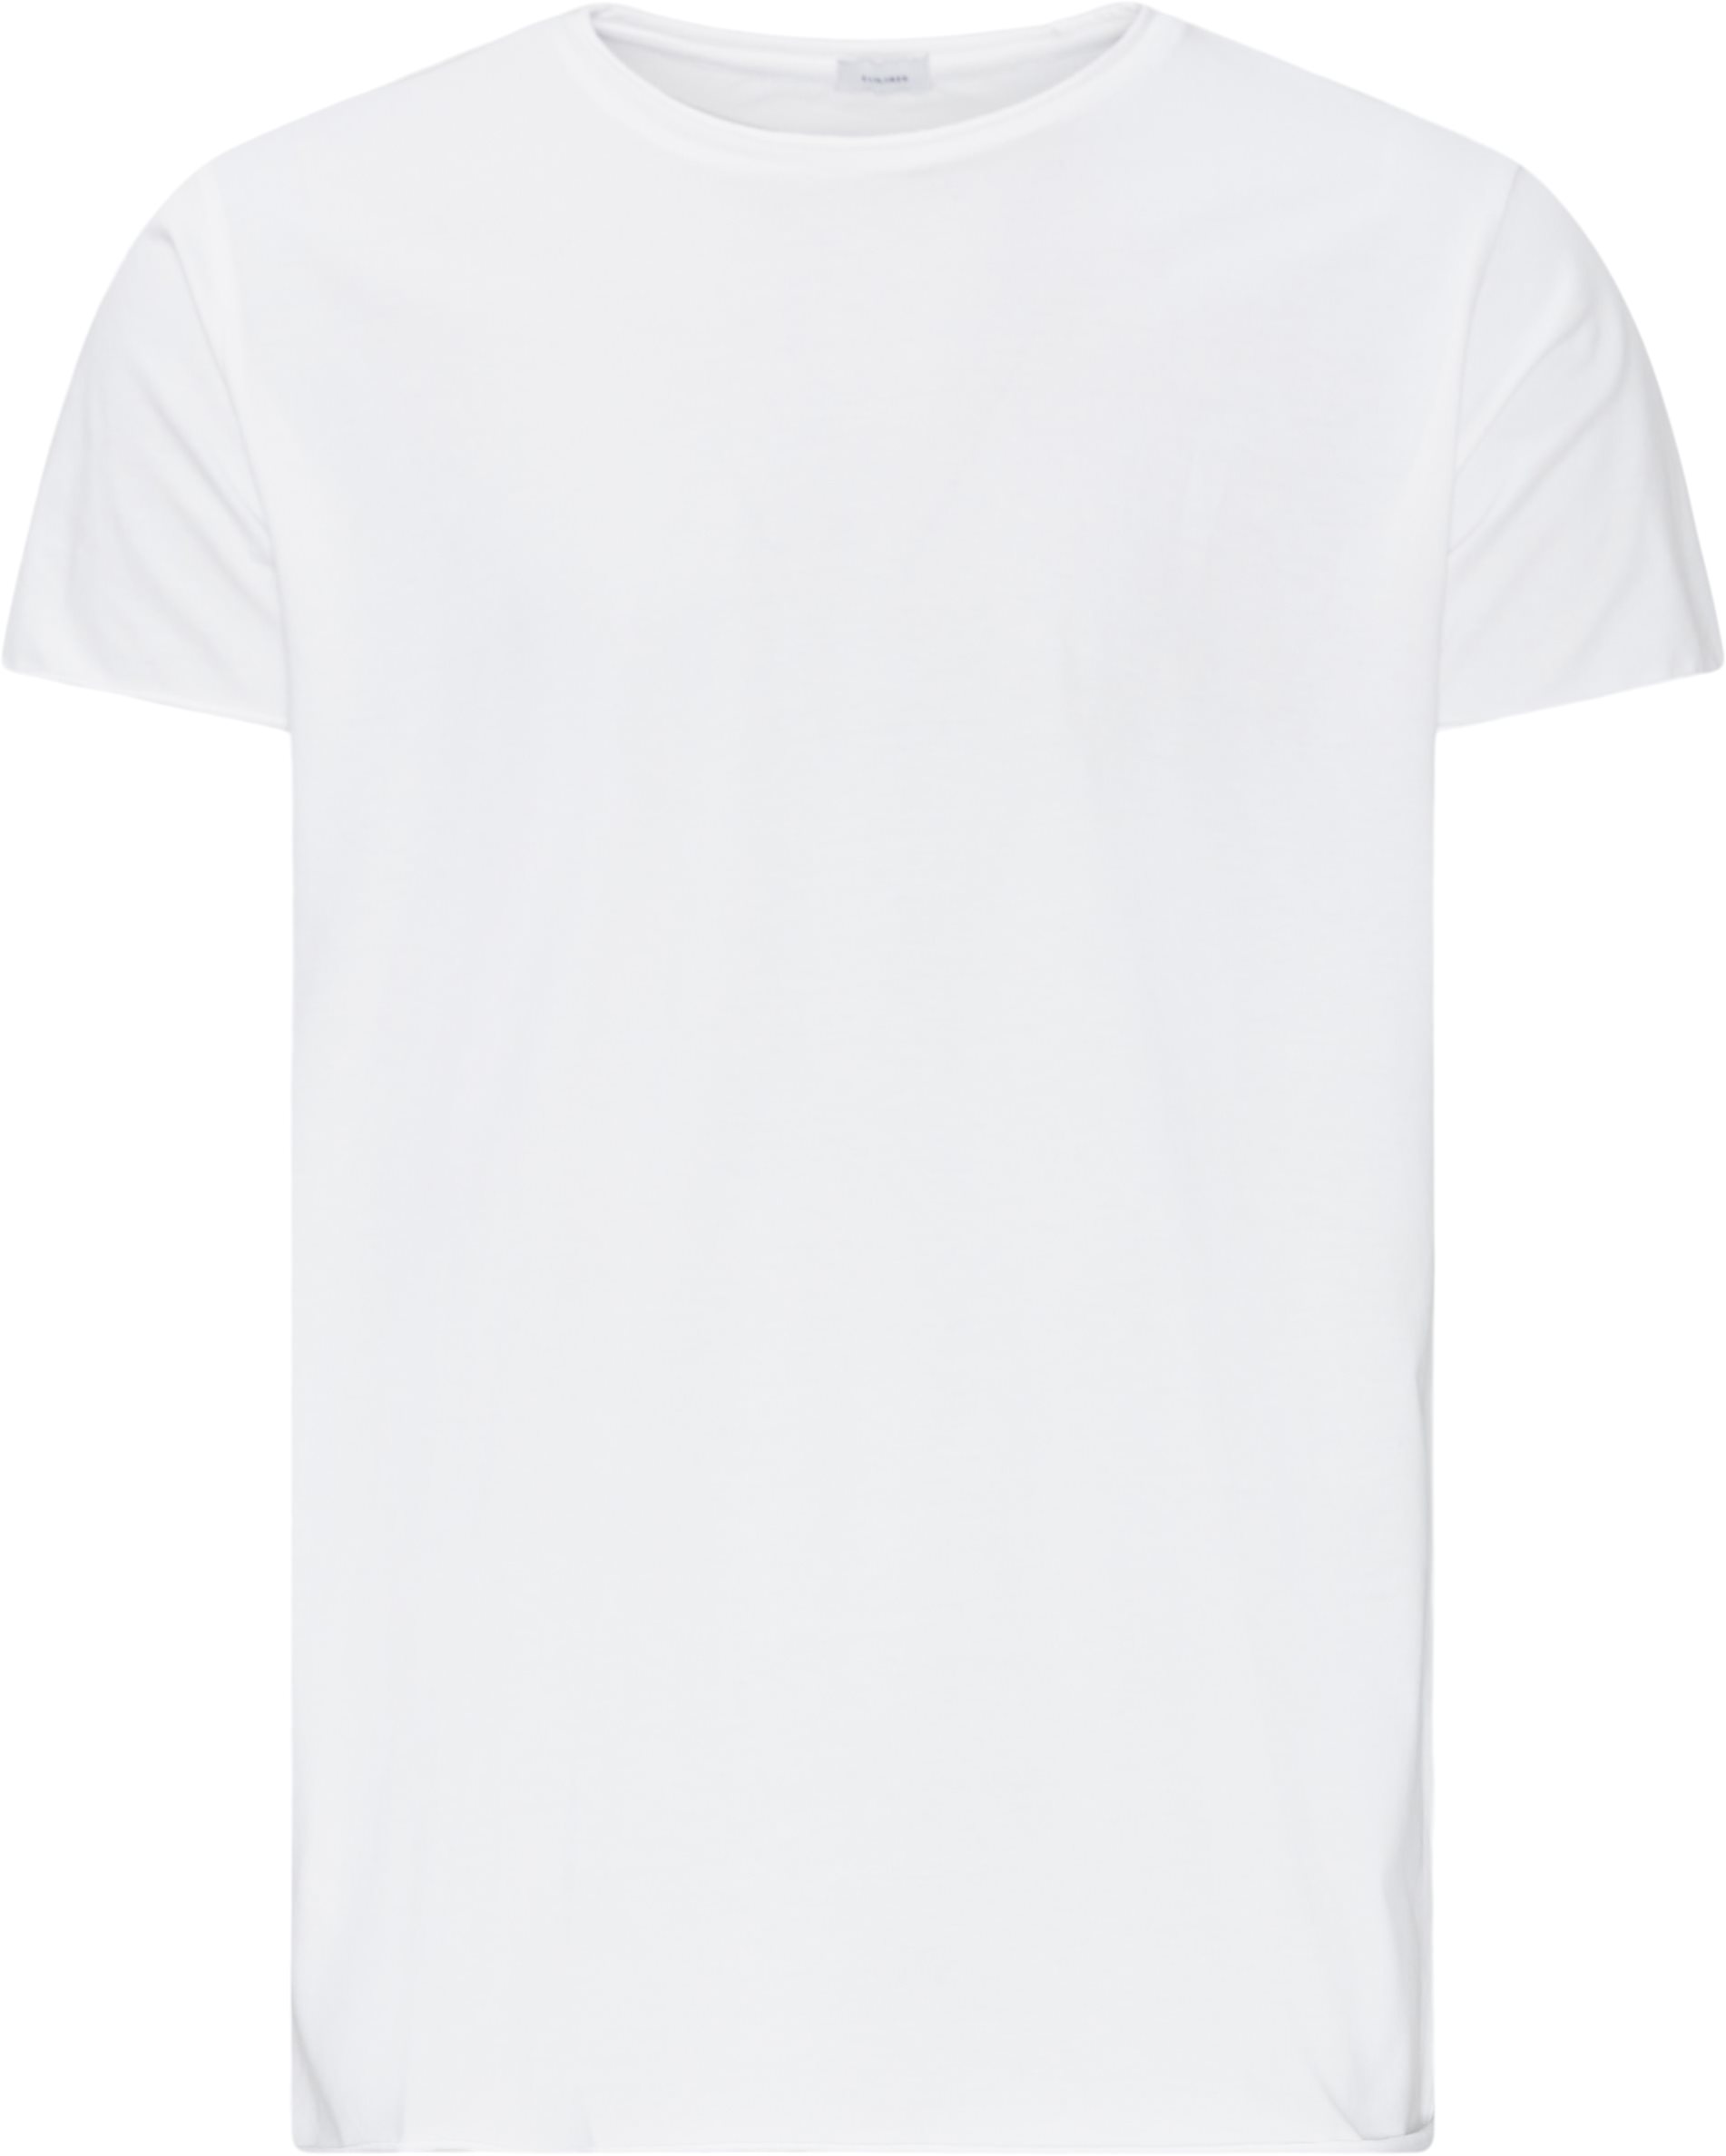 Raw Edge Tee - T-shirts - Regular fit - White